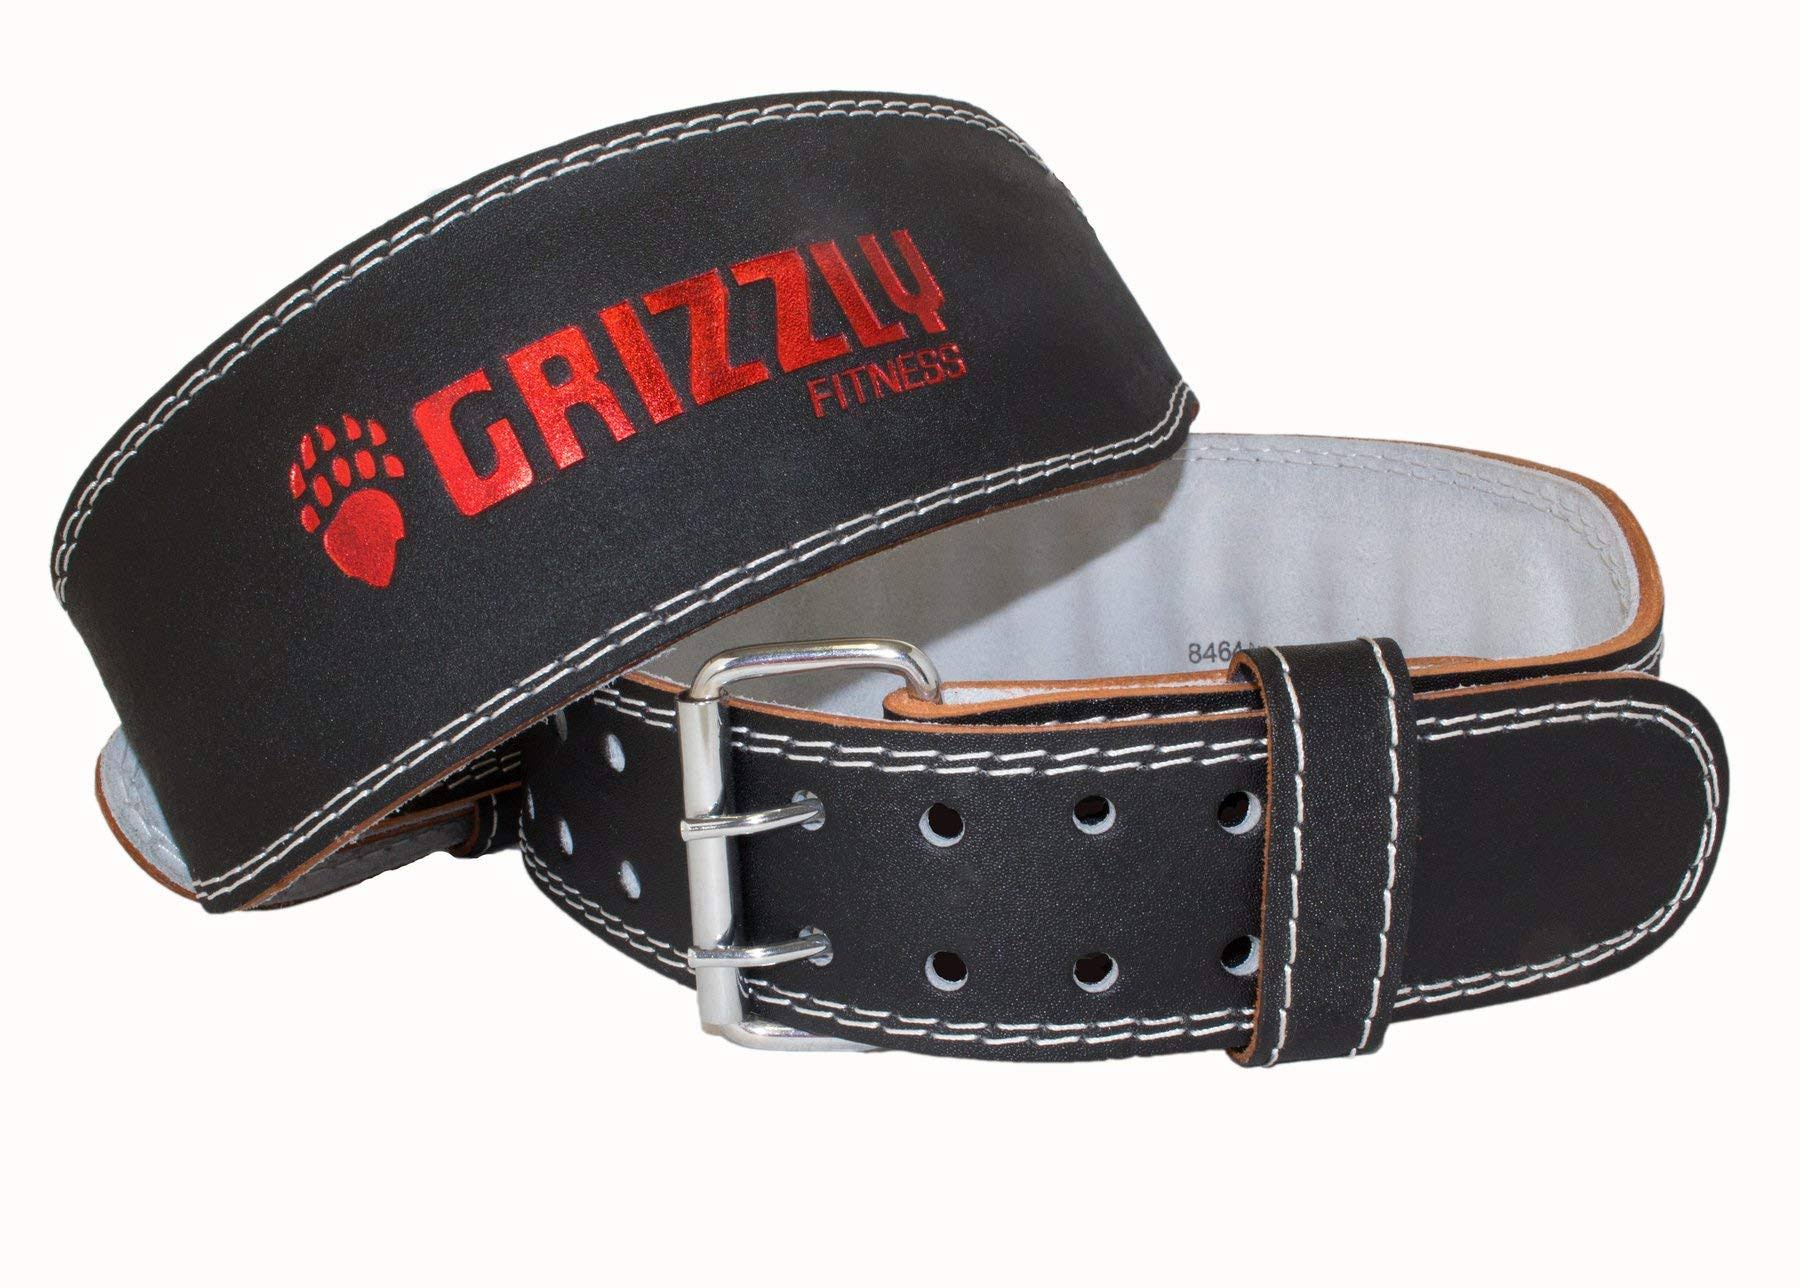 Grizzly Fitness Padded Enforcer Training Belt - Black, Medium